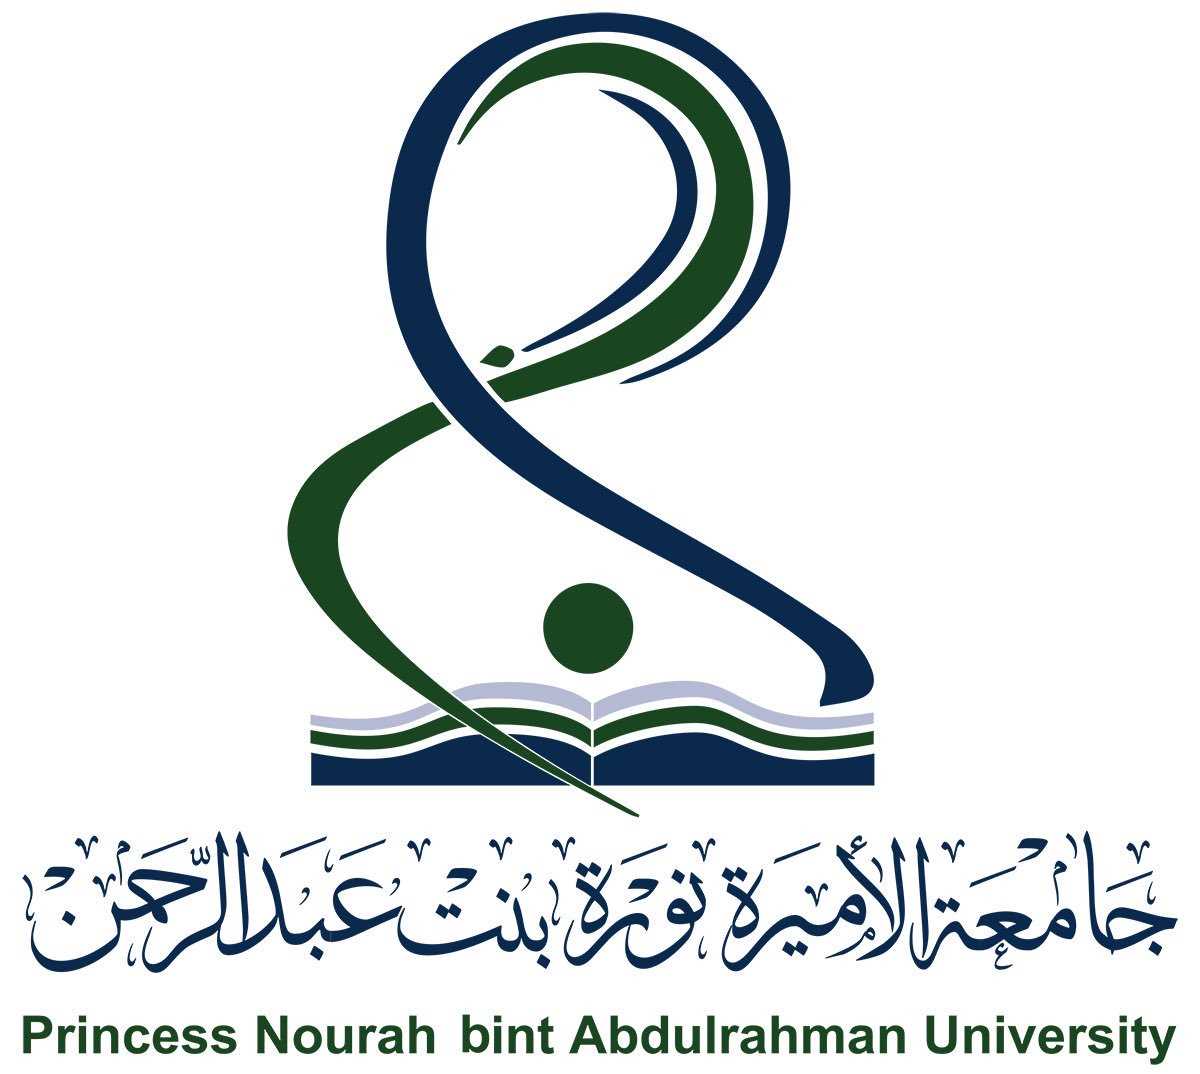 Taif University visit to the communication center at Princess Noura University in Riyadh